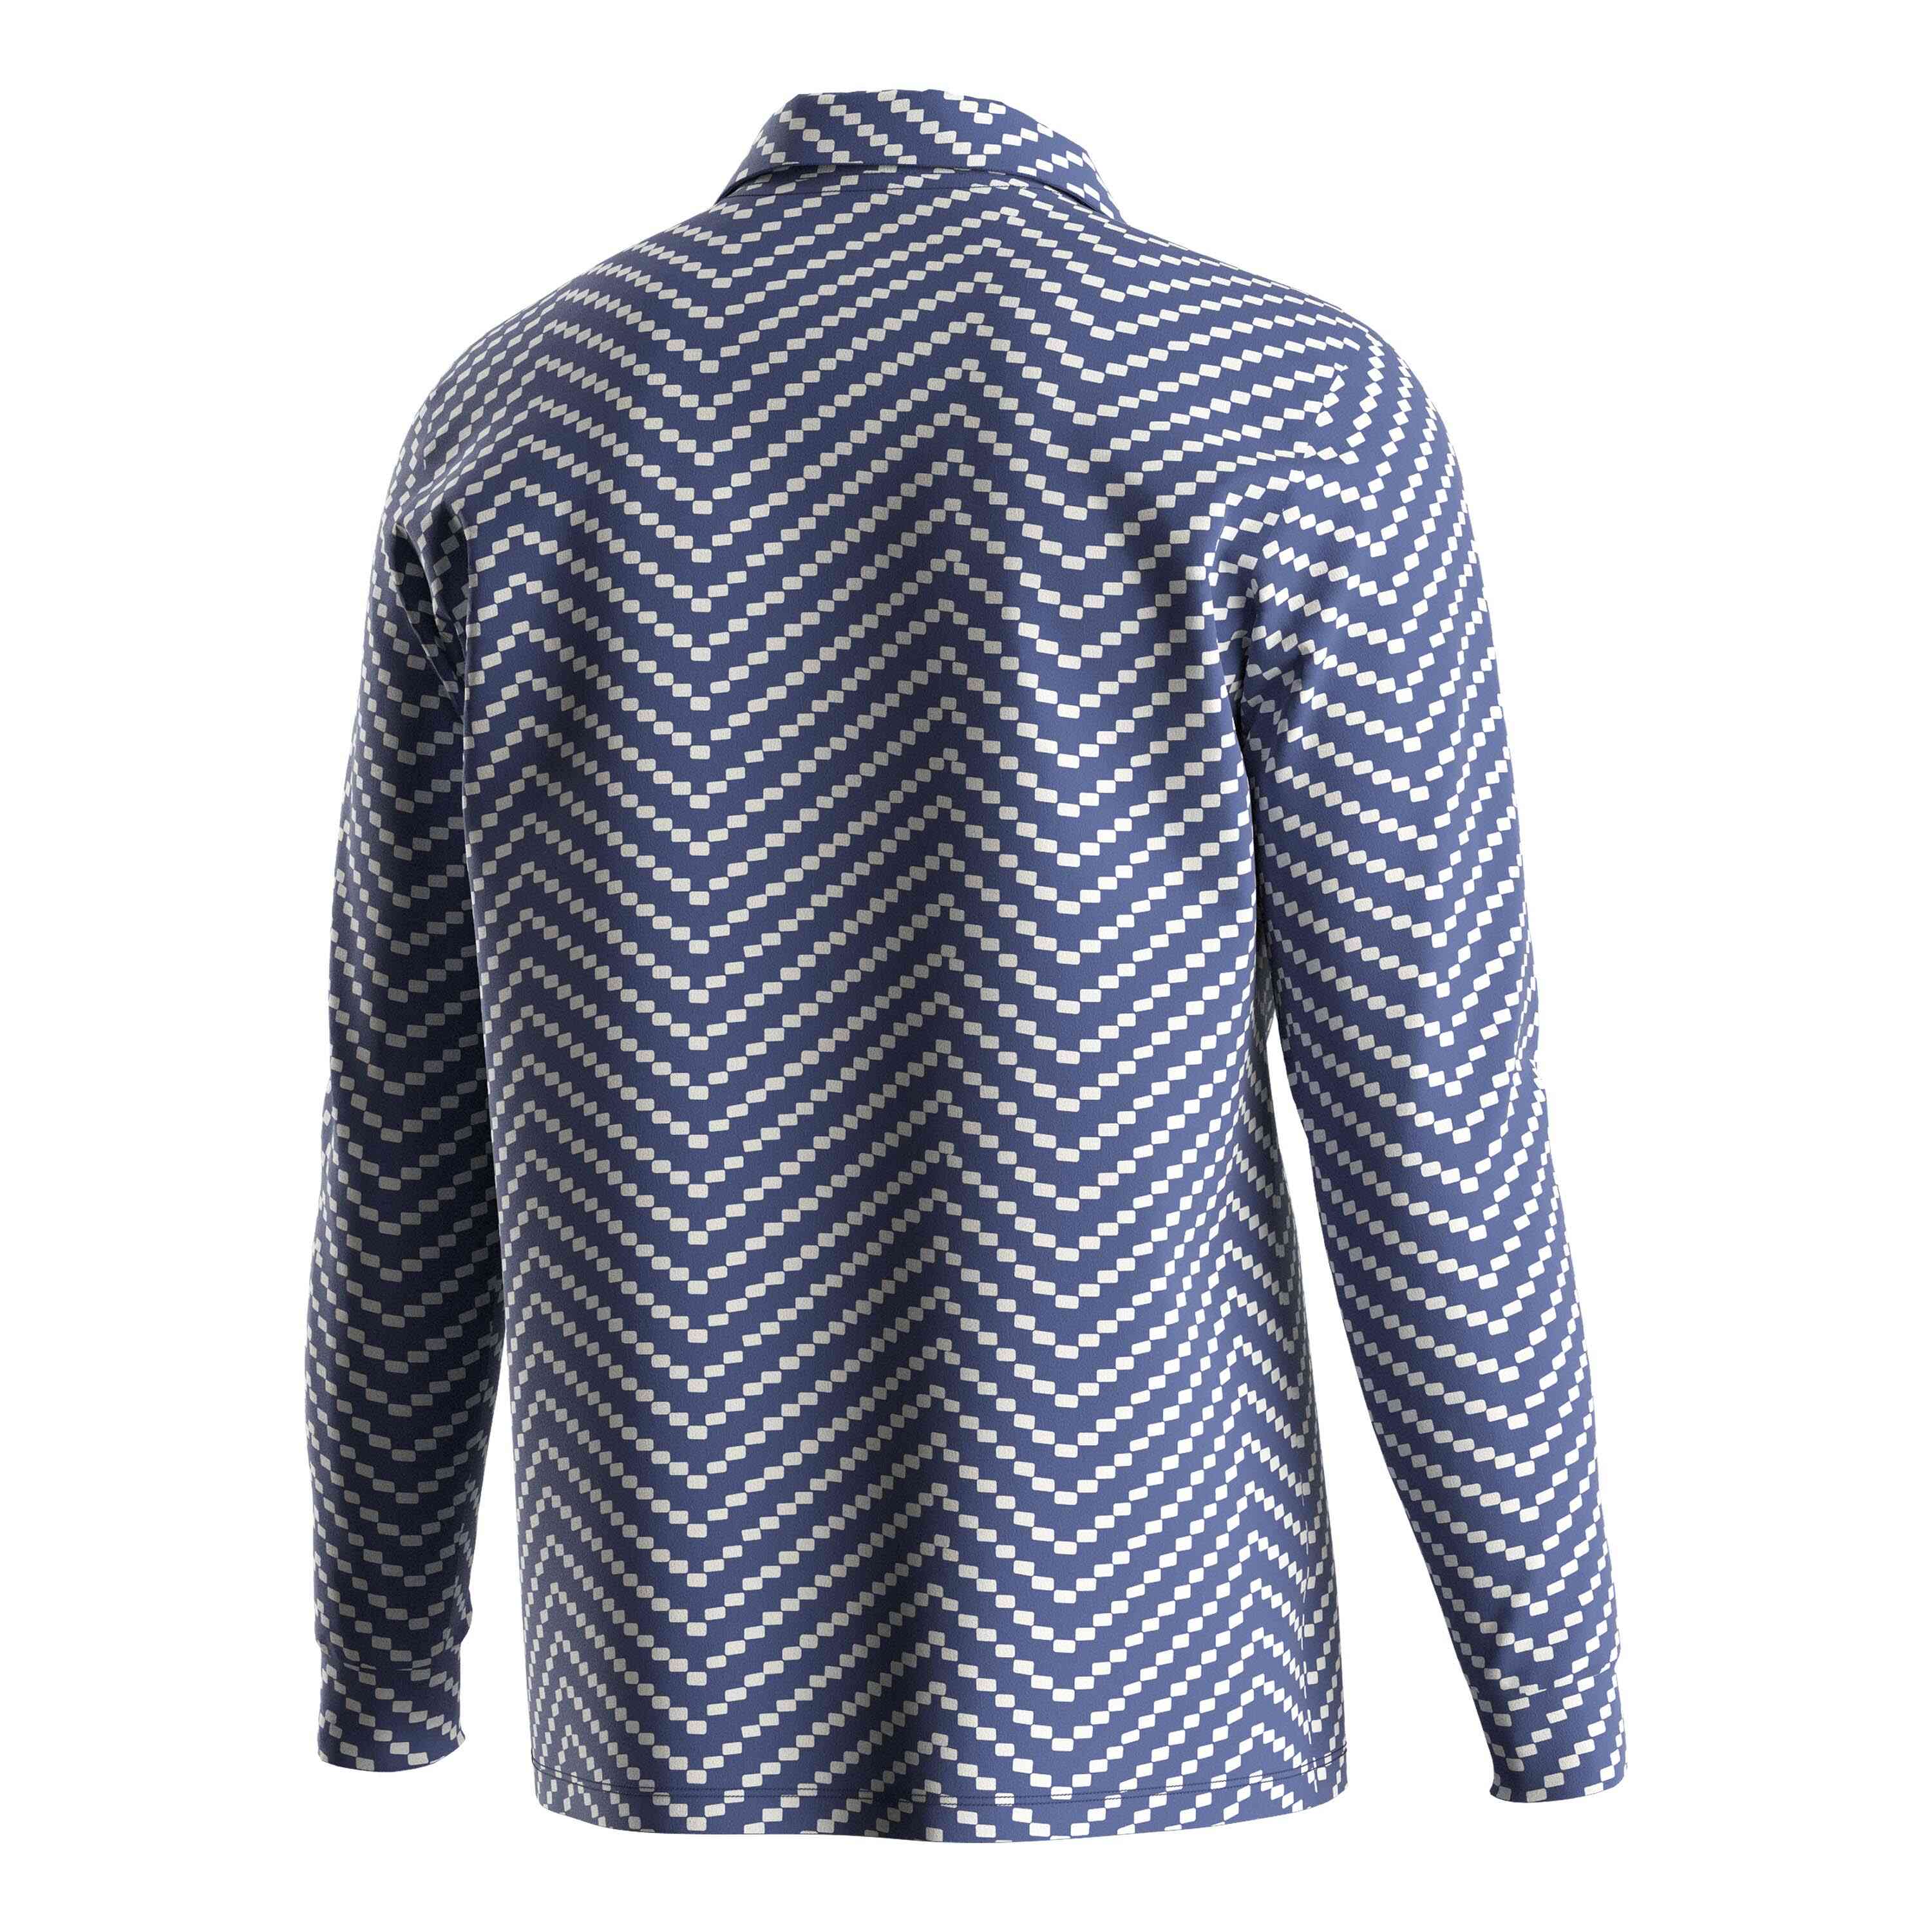 
                RISE cool golf shirts template horizontal wavy zipper polo shirt